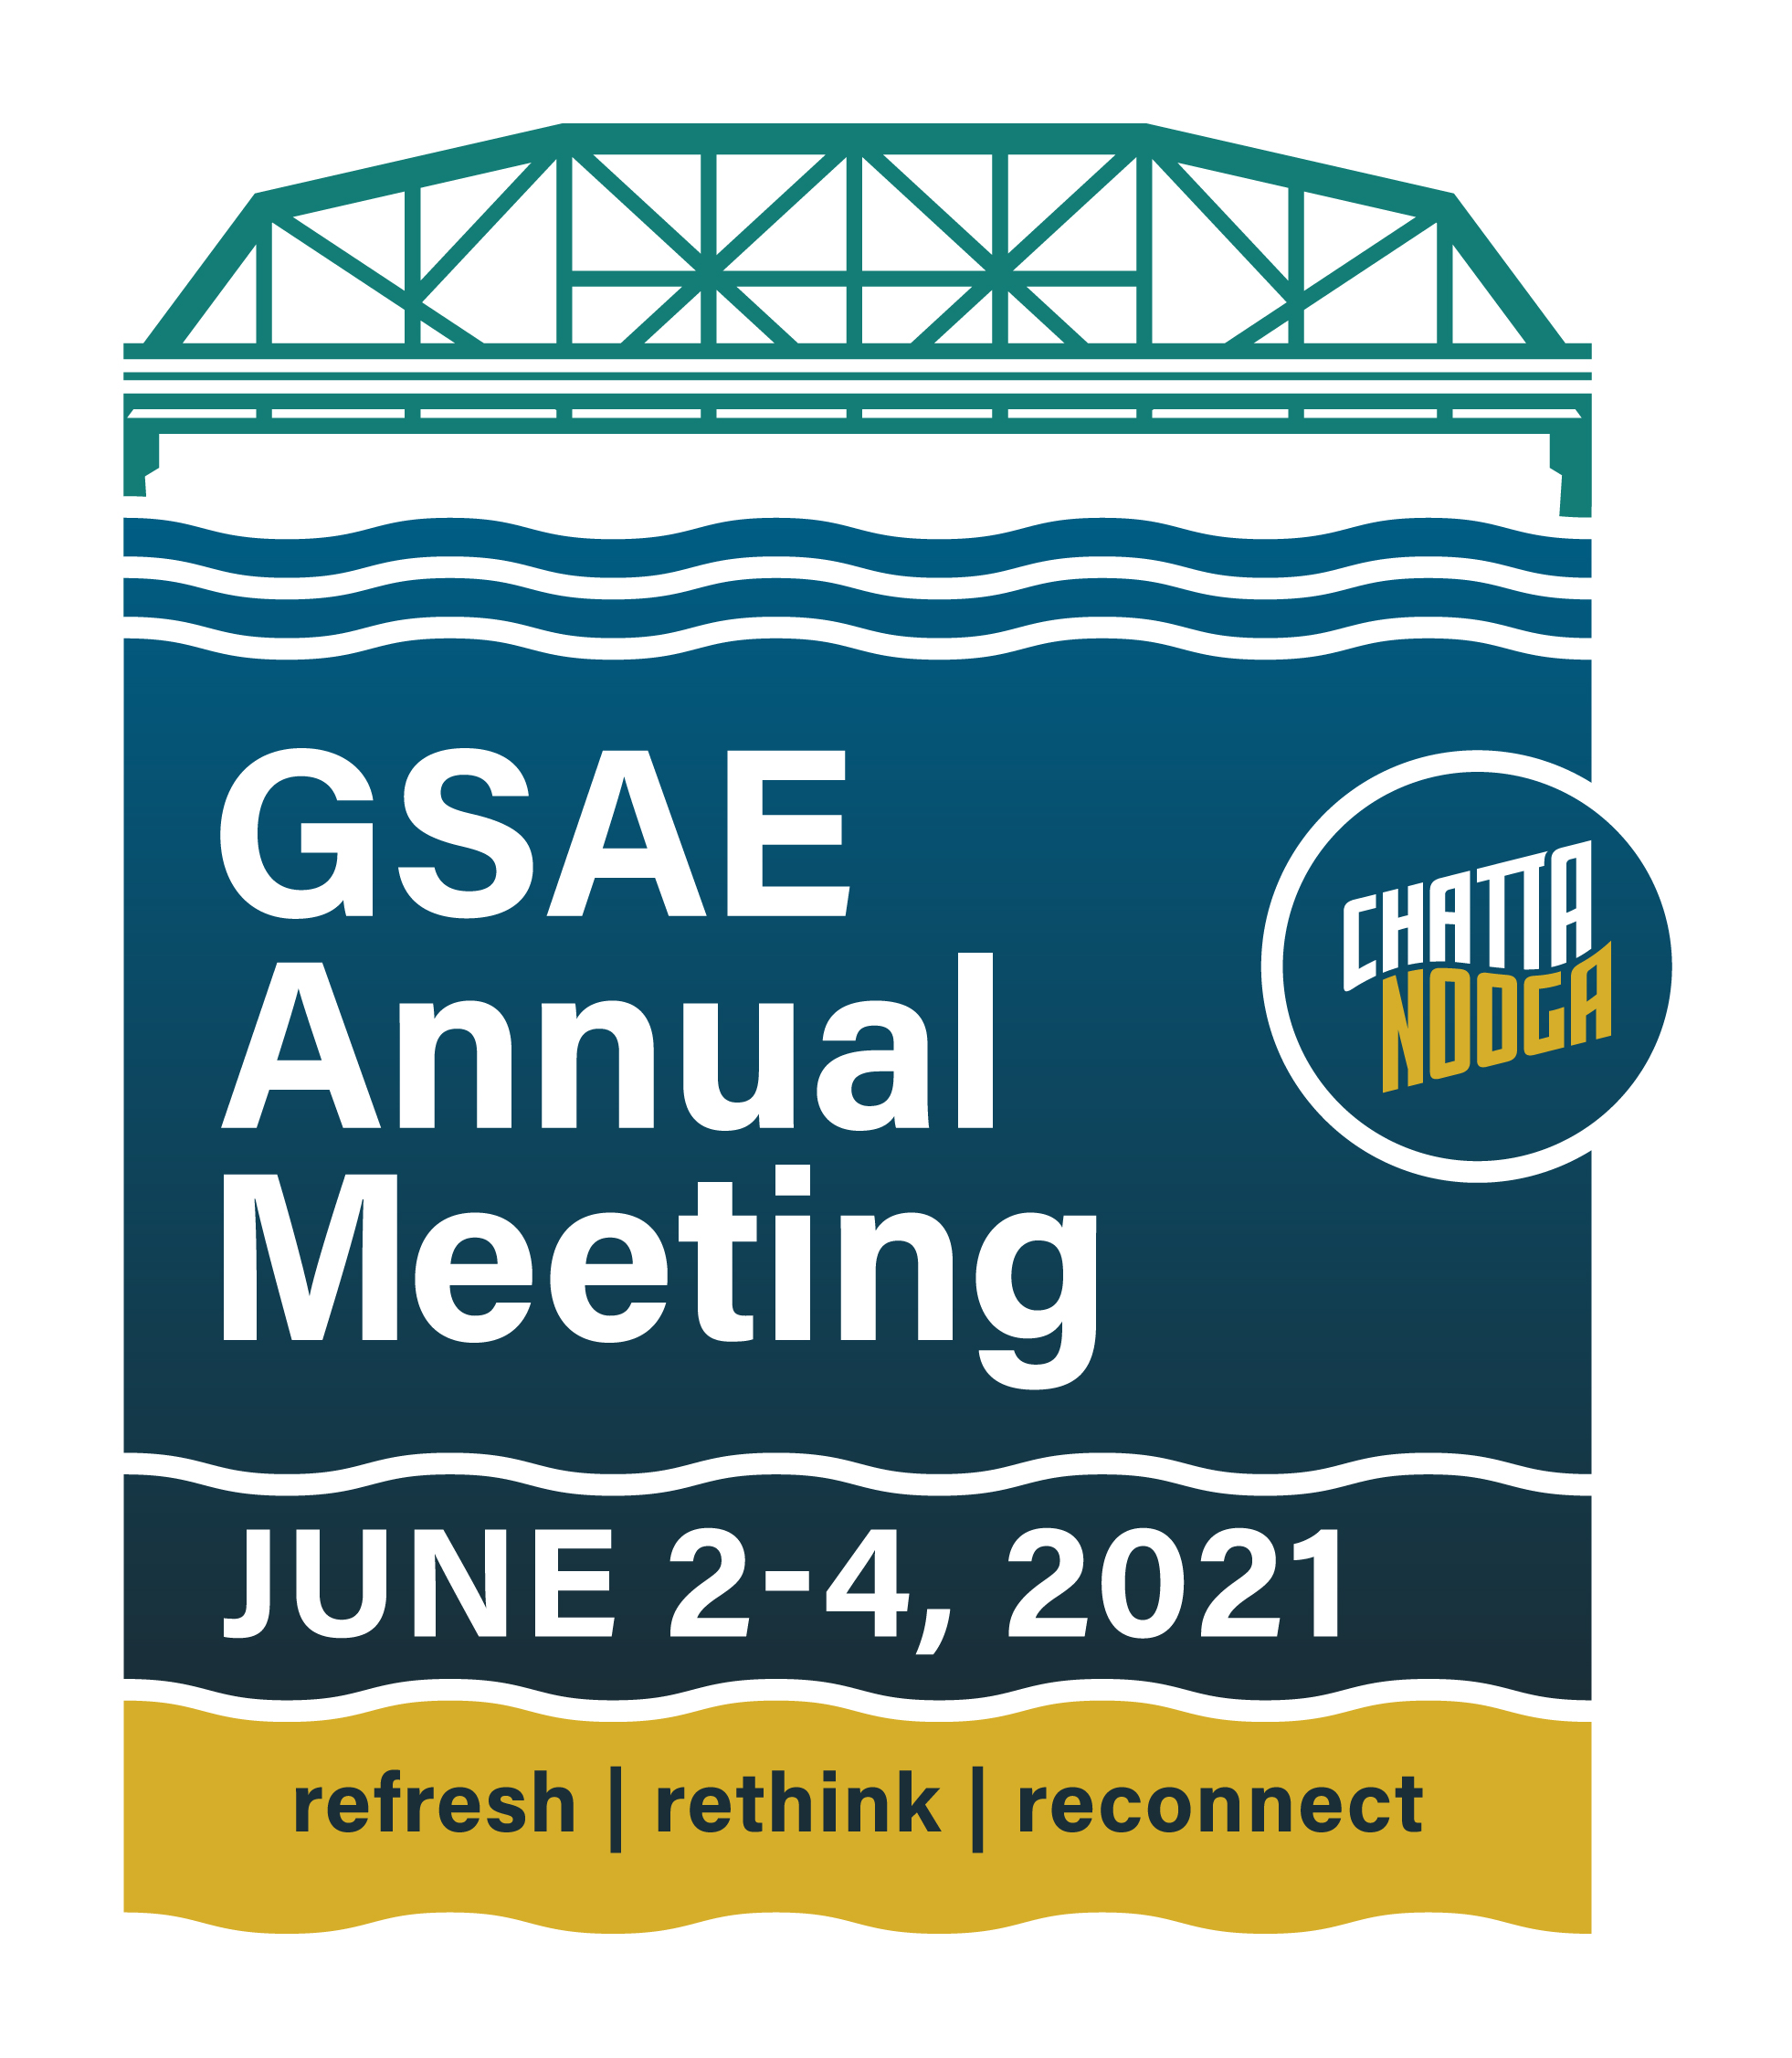 GSAE Annual Meeting 2021 Chattanooga Logo